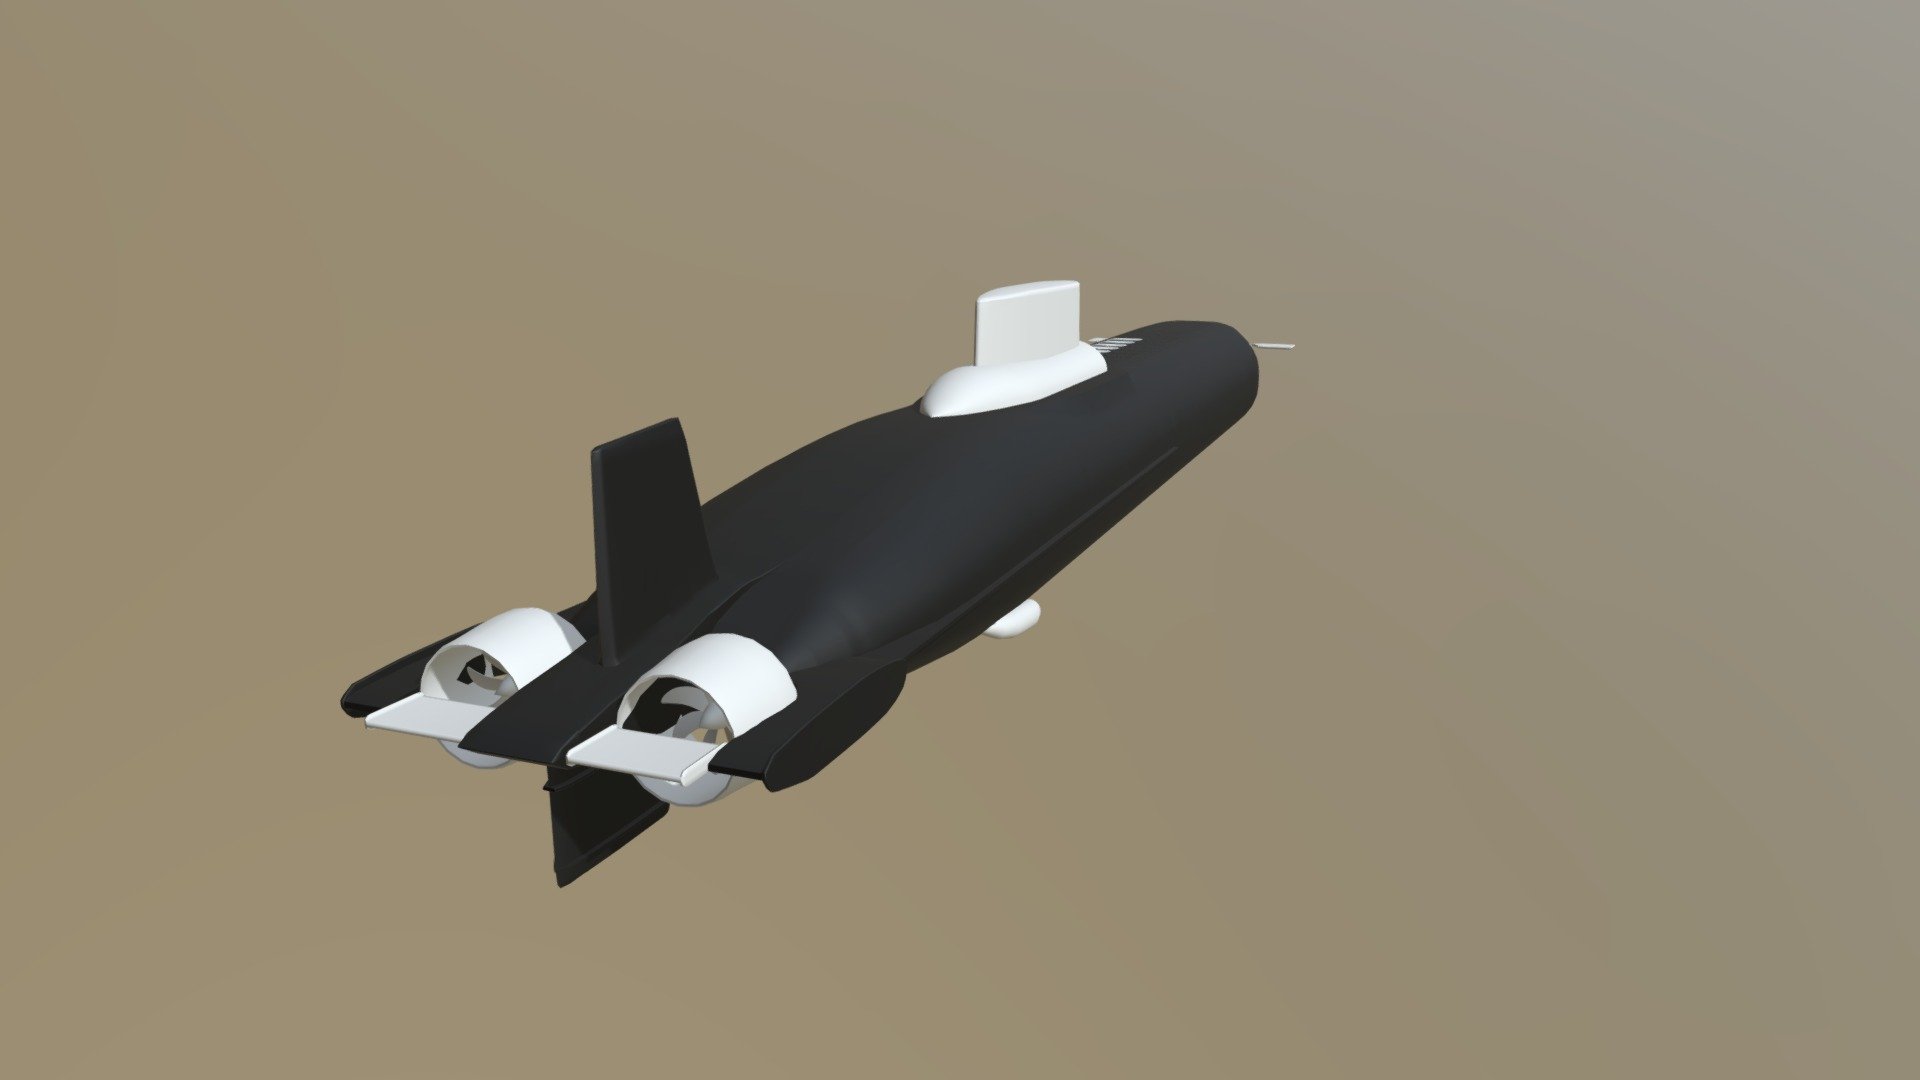 Akula Class submarine (pre-texturing phase)